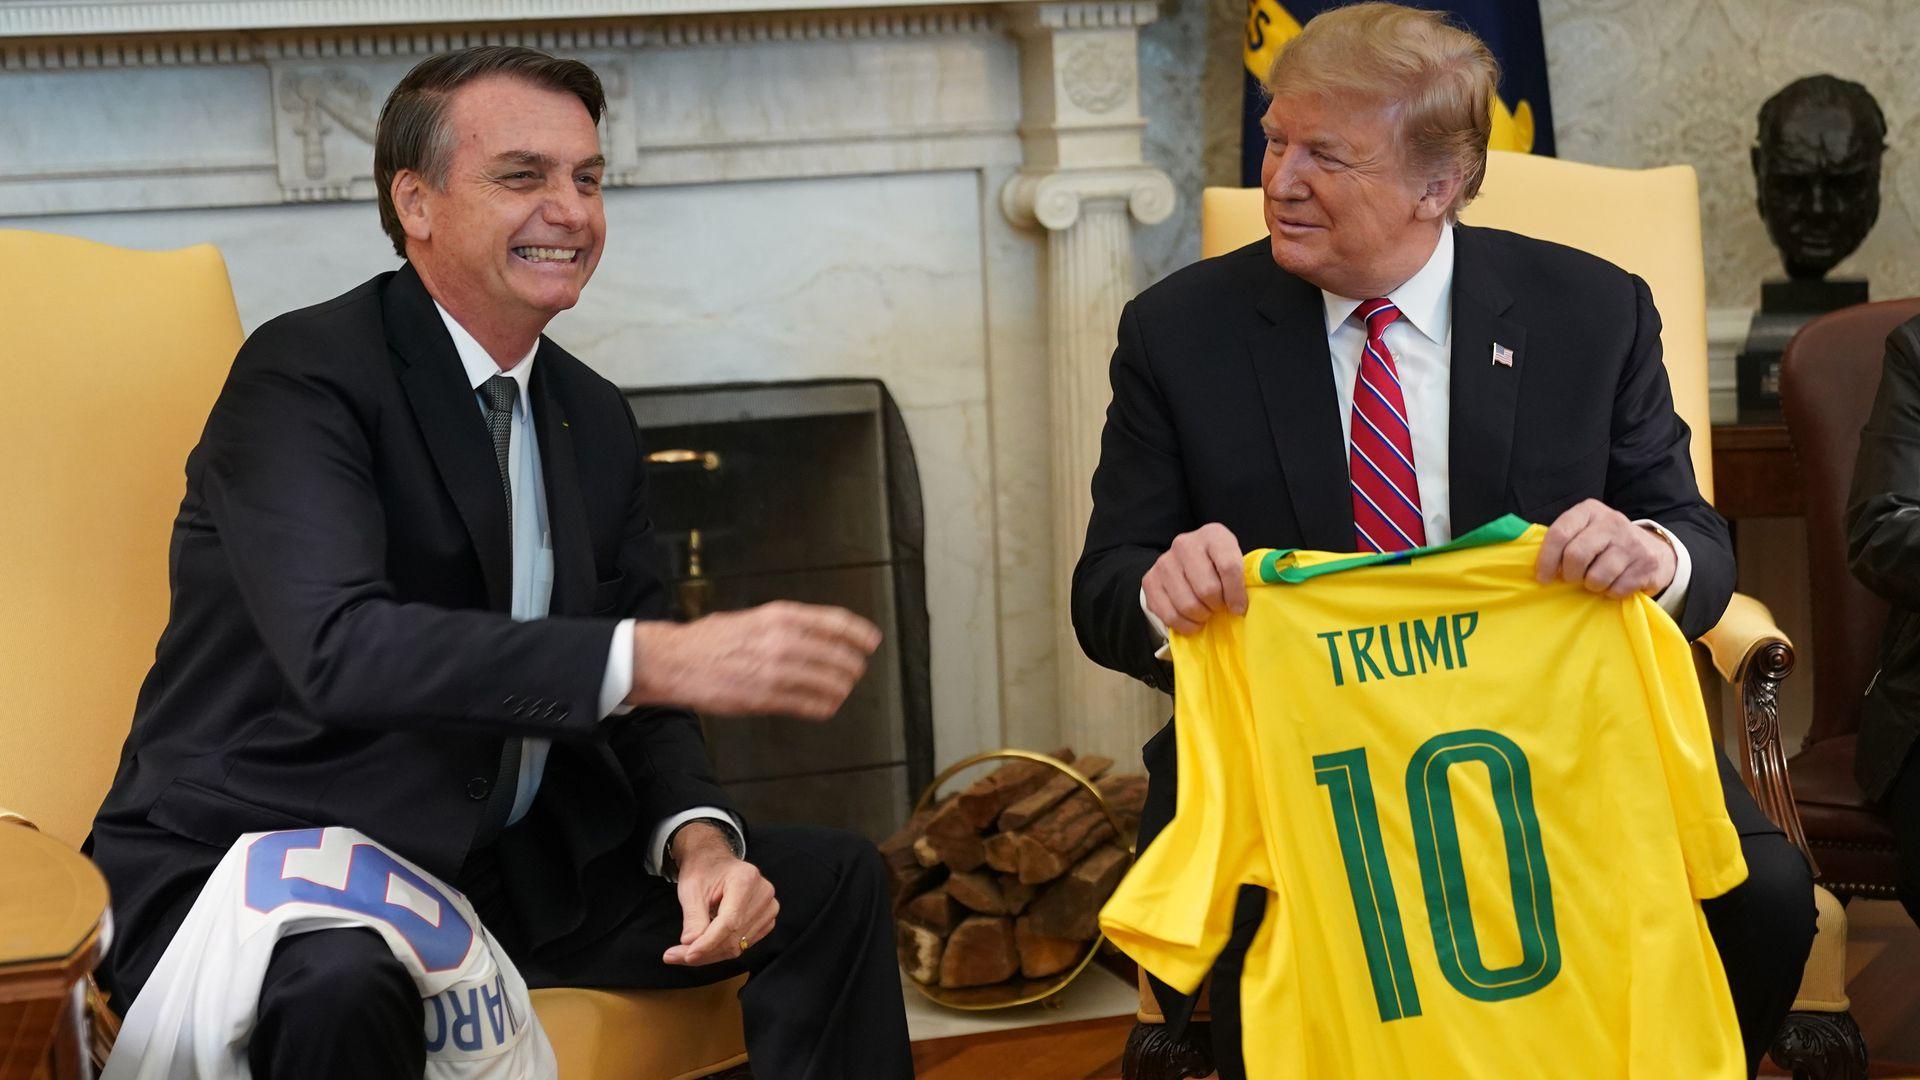 Brazilian President Jair Bolsonaro and President Trump in the Oval Office, March 2019